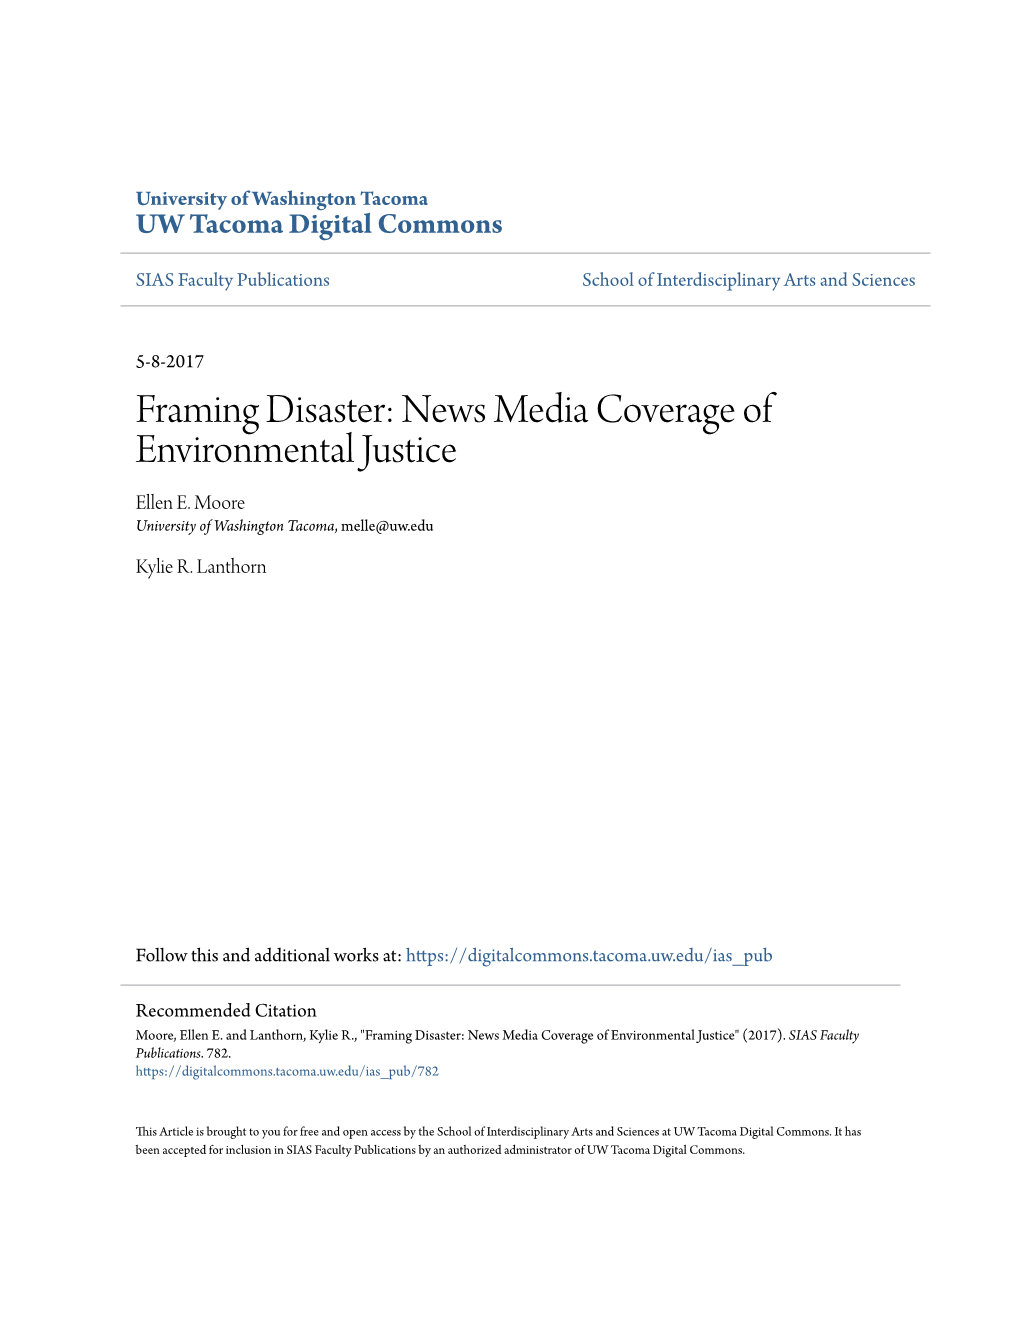 Framing Disaster: News Media Coverage of Environmental Justice Ellen E